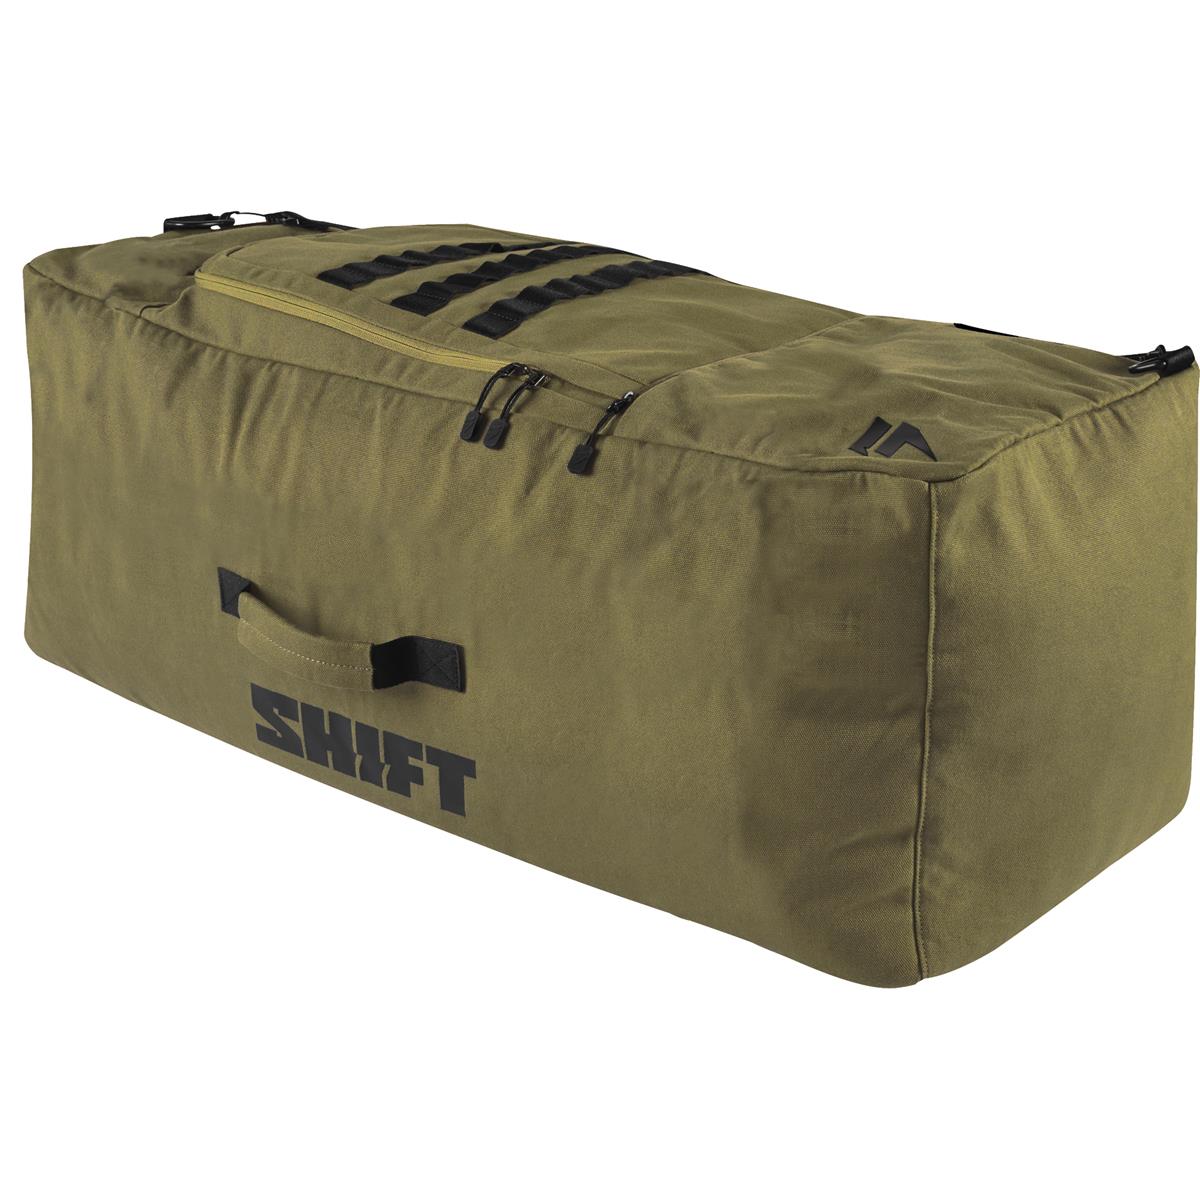 Shift Travel Bag Duffle Bag Fatigue Green